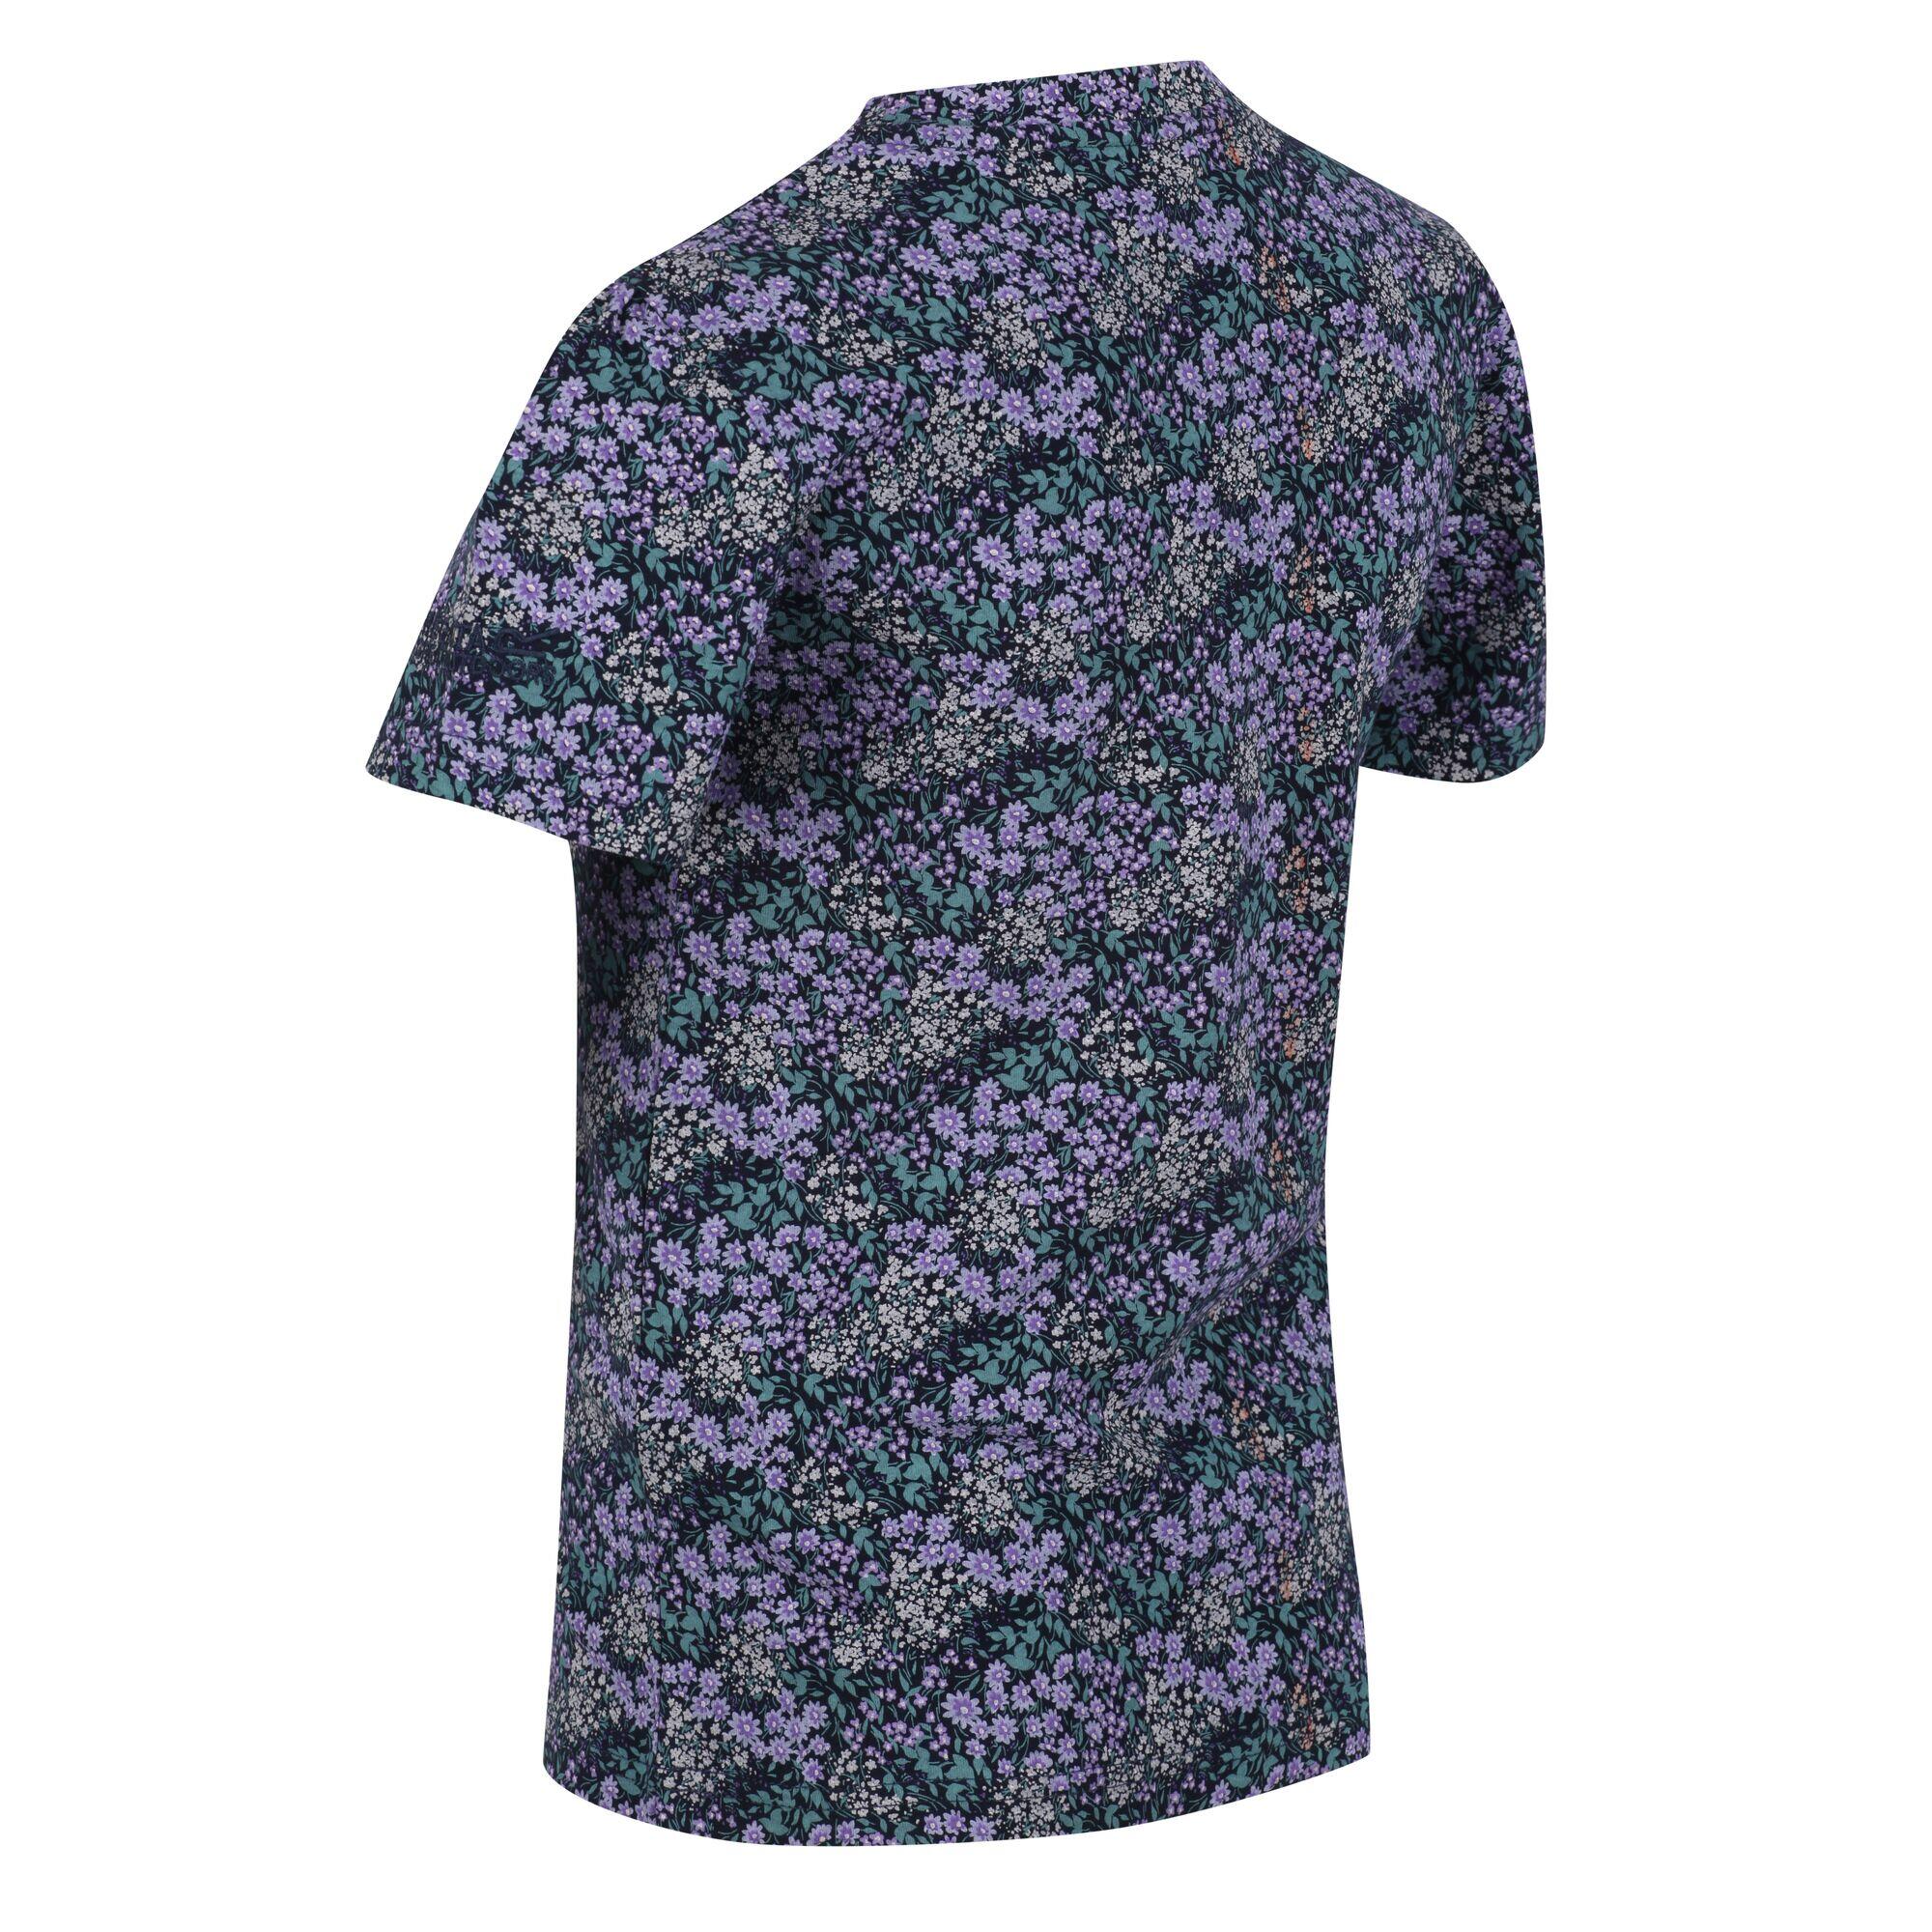 Bosley V Kids Walking Short Sleeve T-Shirt - Navy Ditsy Floral 5/5